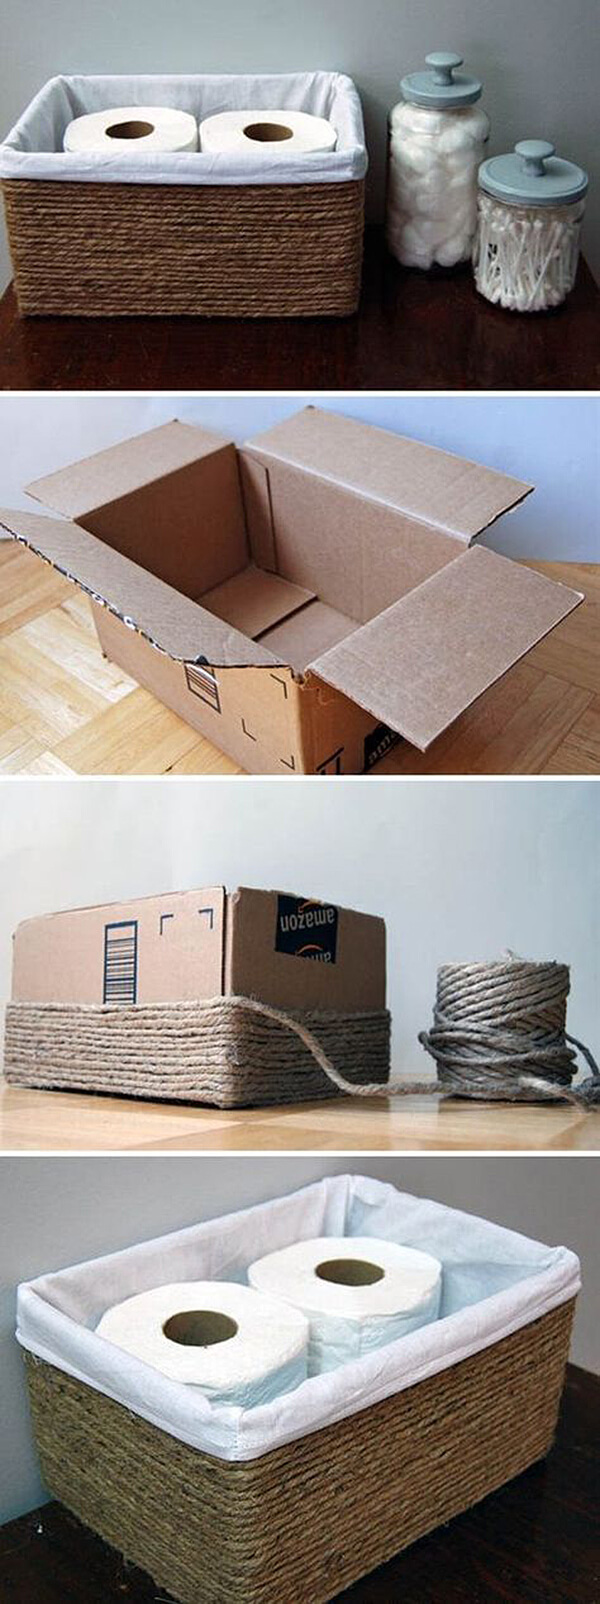 A Box Transformed into a Storage Unit